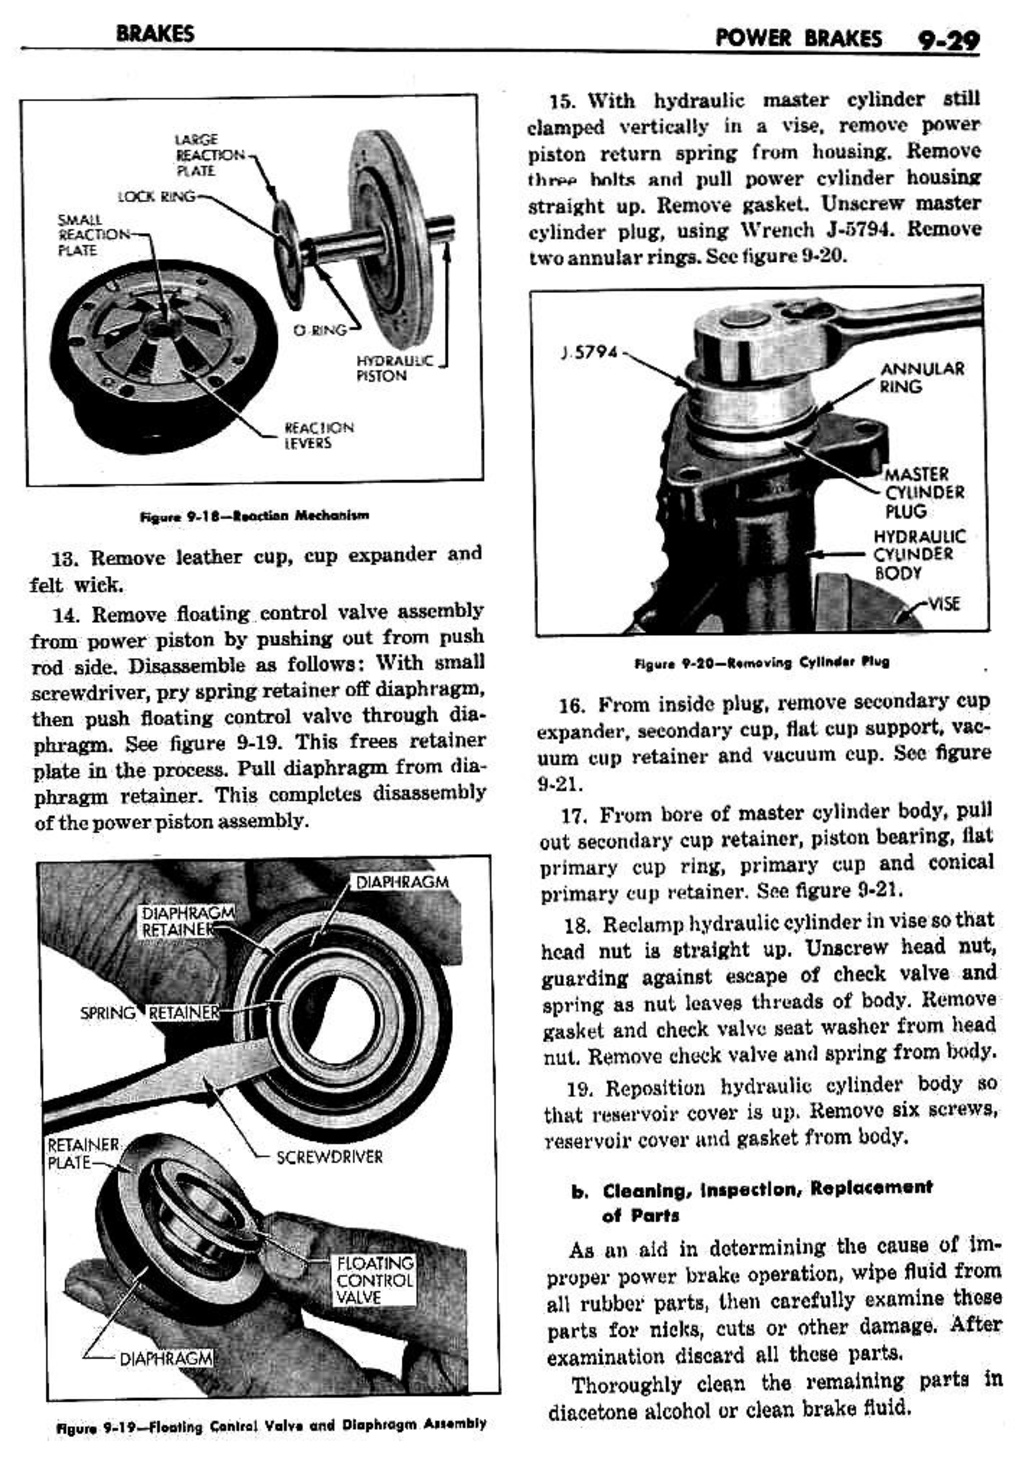 n_10 1959 Buick Shop Manual - Brakes-029-029.jpg